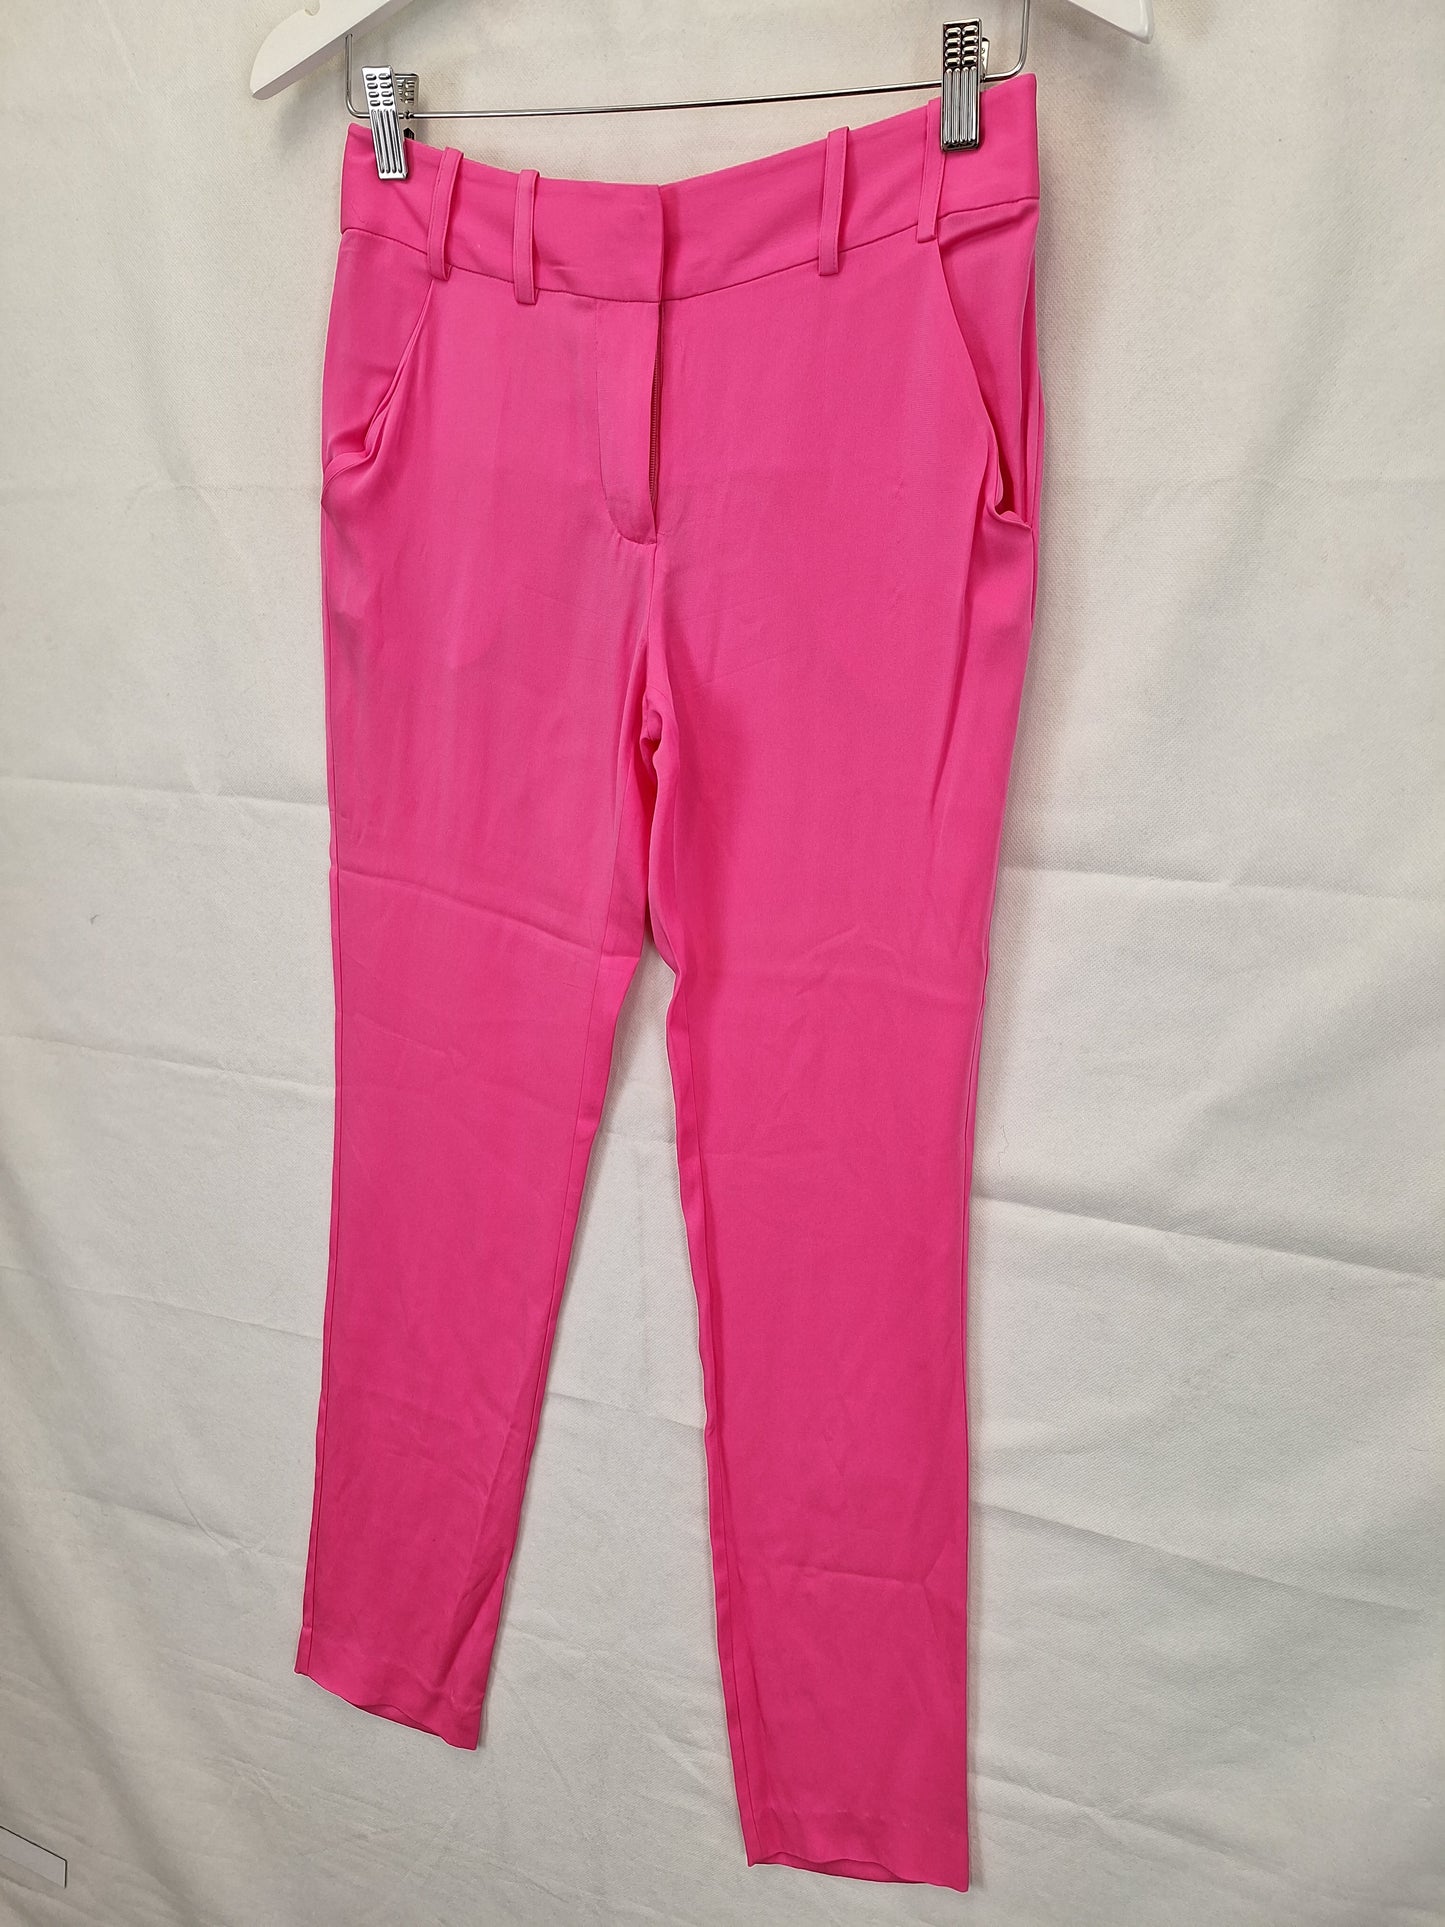 Sass & Bide Fluo Pink Pop Silk Blend Pants Size 6 by SwapUp-Online Second Hand Store-Online Thrift Store